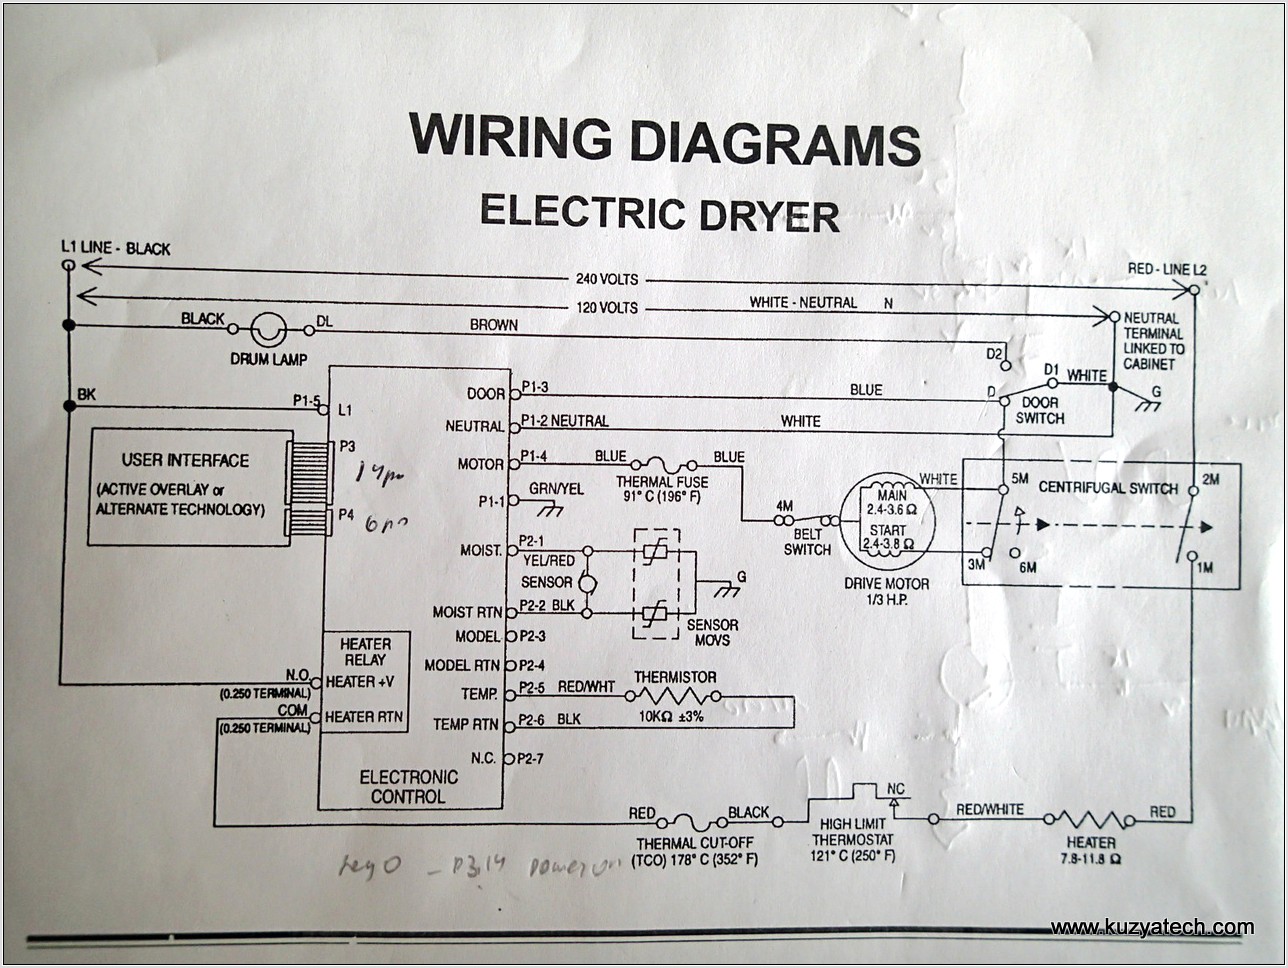 Whirlpool Dryer Wiring Diagram